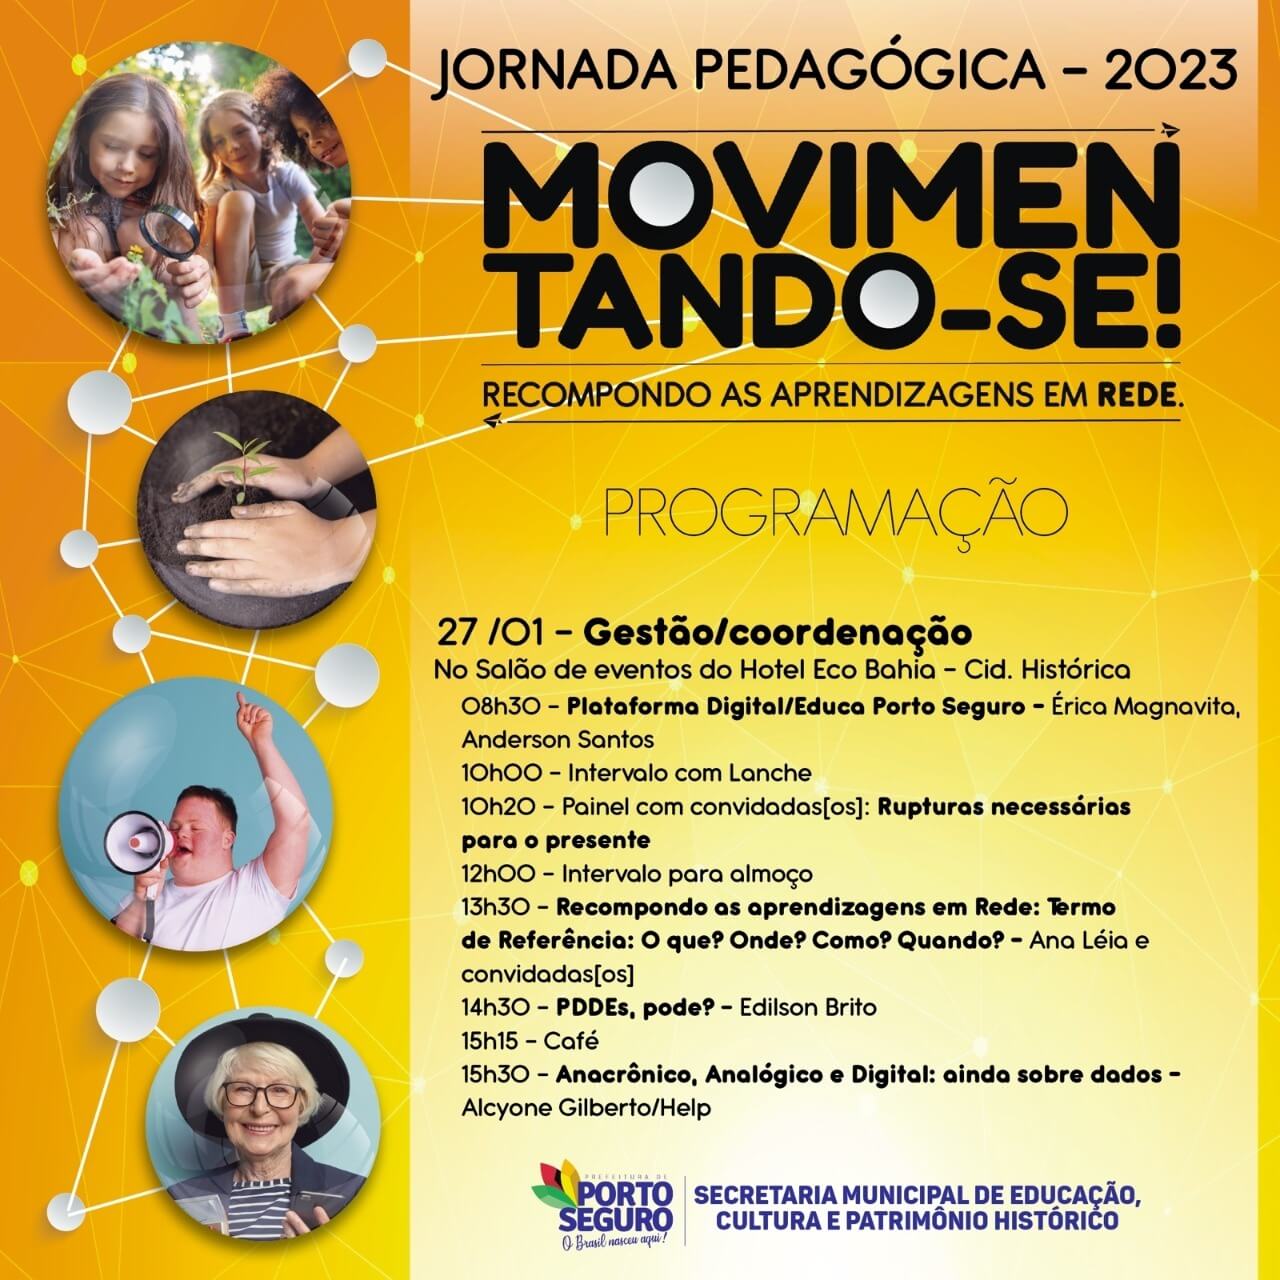 PORTO SEGURO PROMOVE A JORNADA PEDAGÓGICA 2023 26